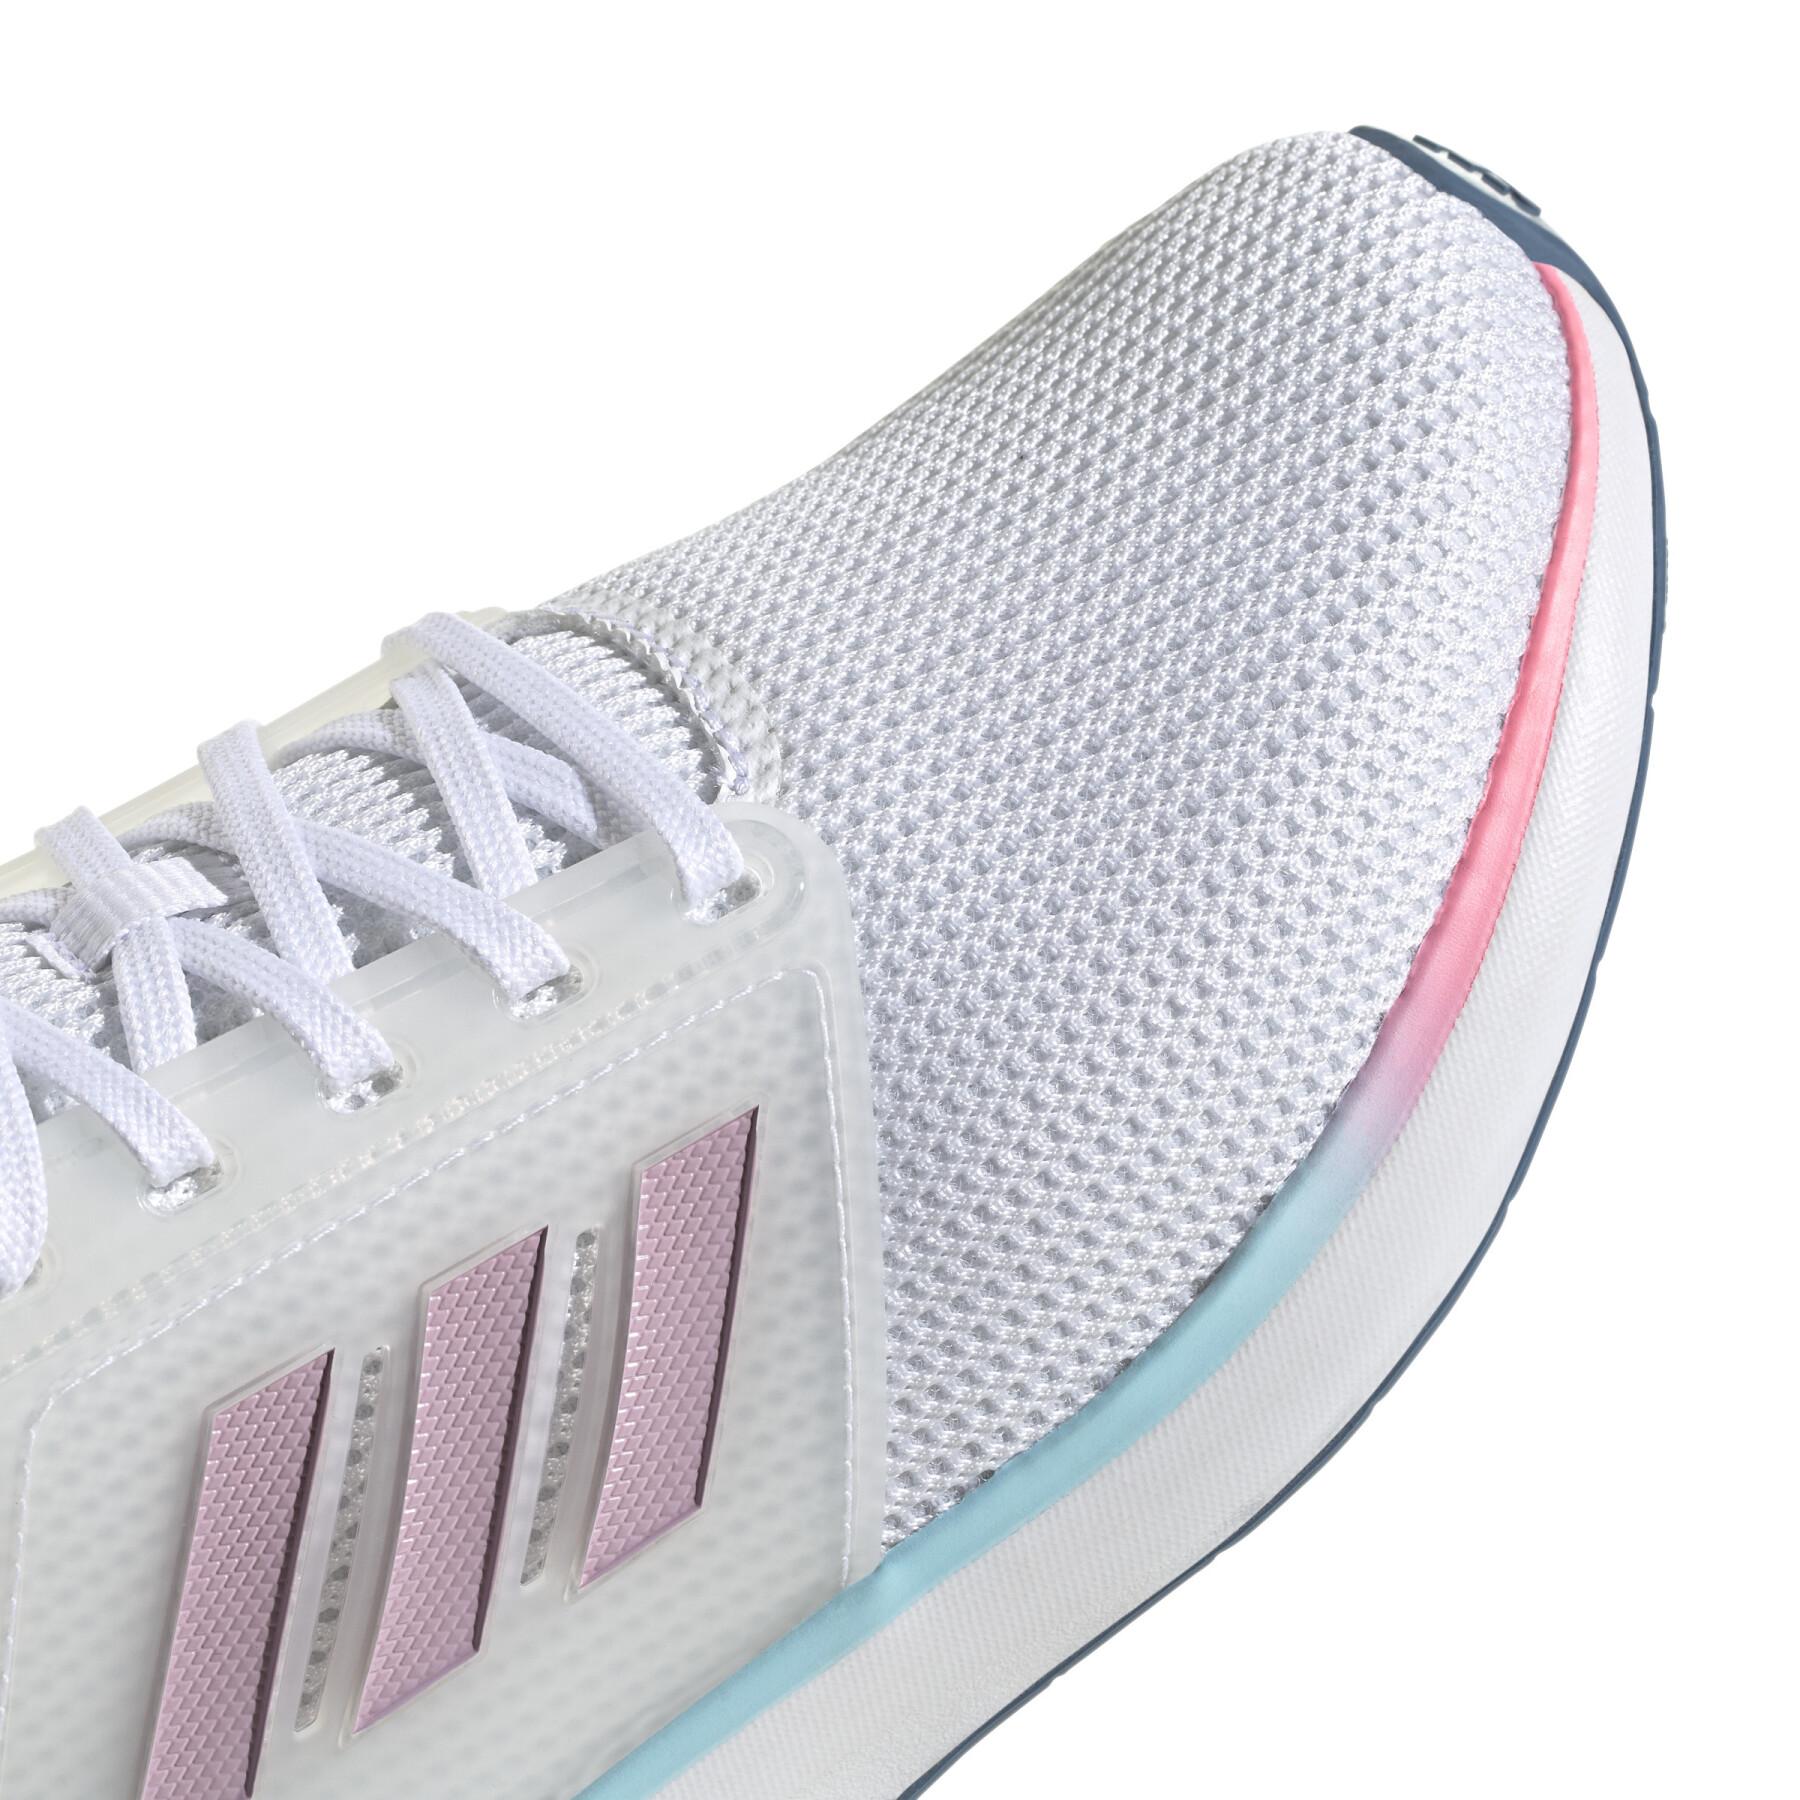 Women's running shoes adidas EQ19 Run